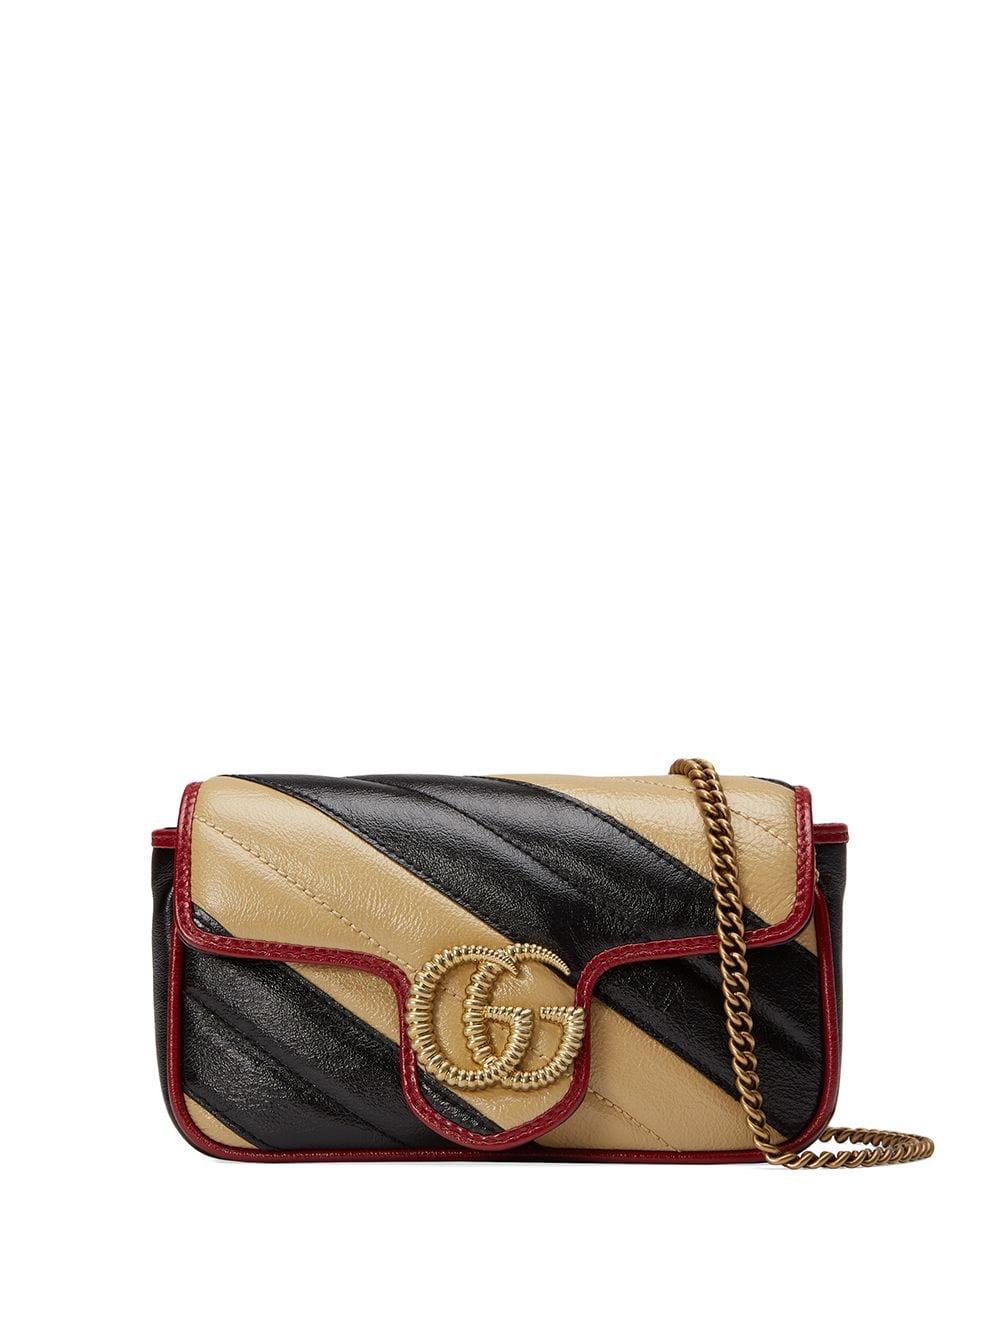 Gucci Mini GG Marmont Shoulder Bag in Black - Lyst